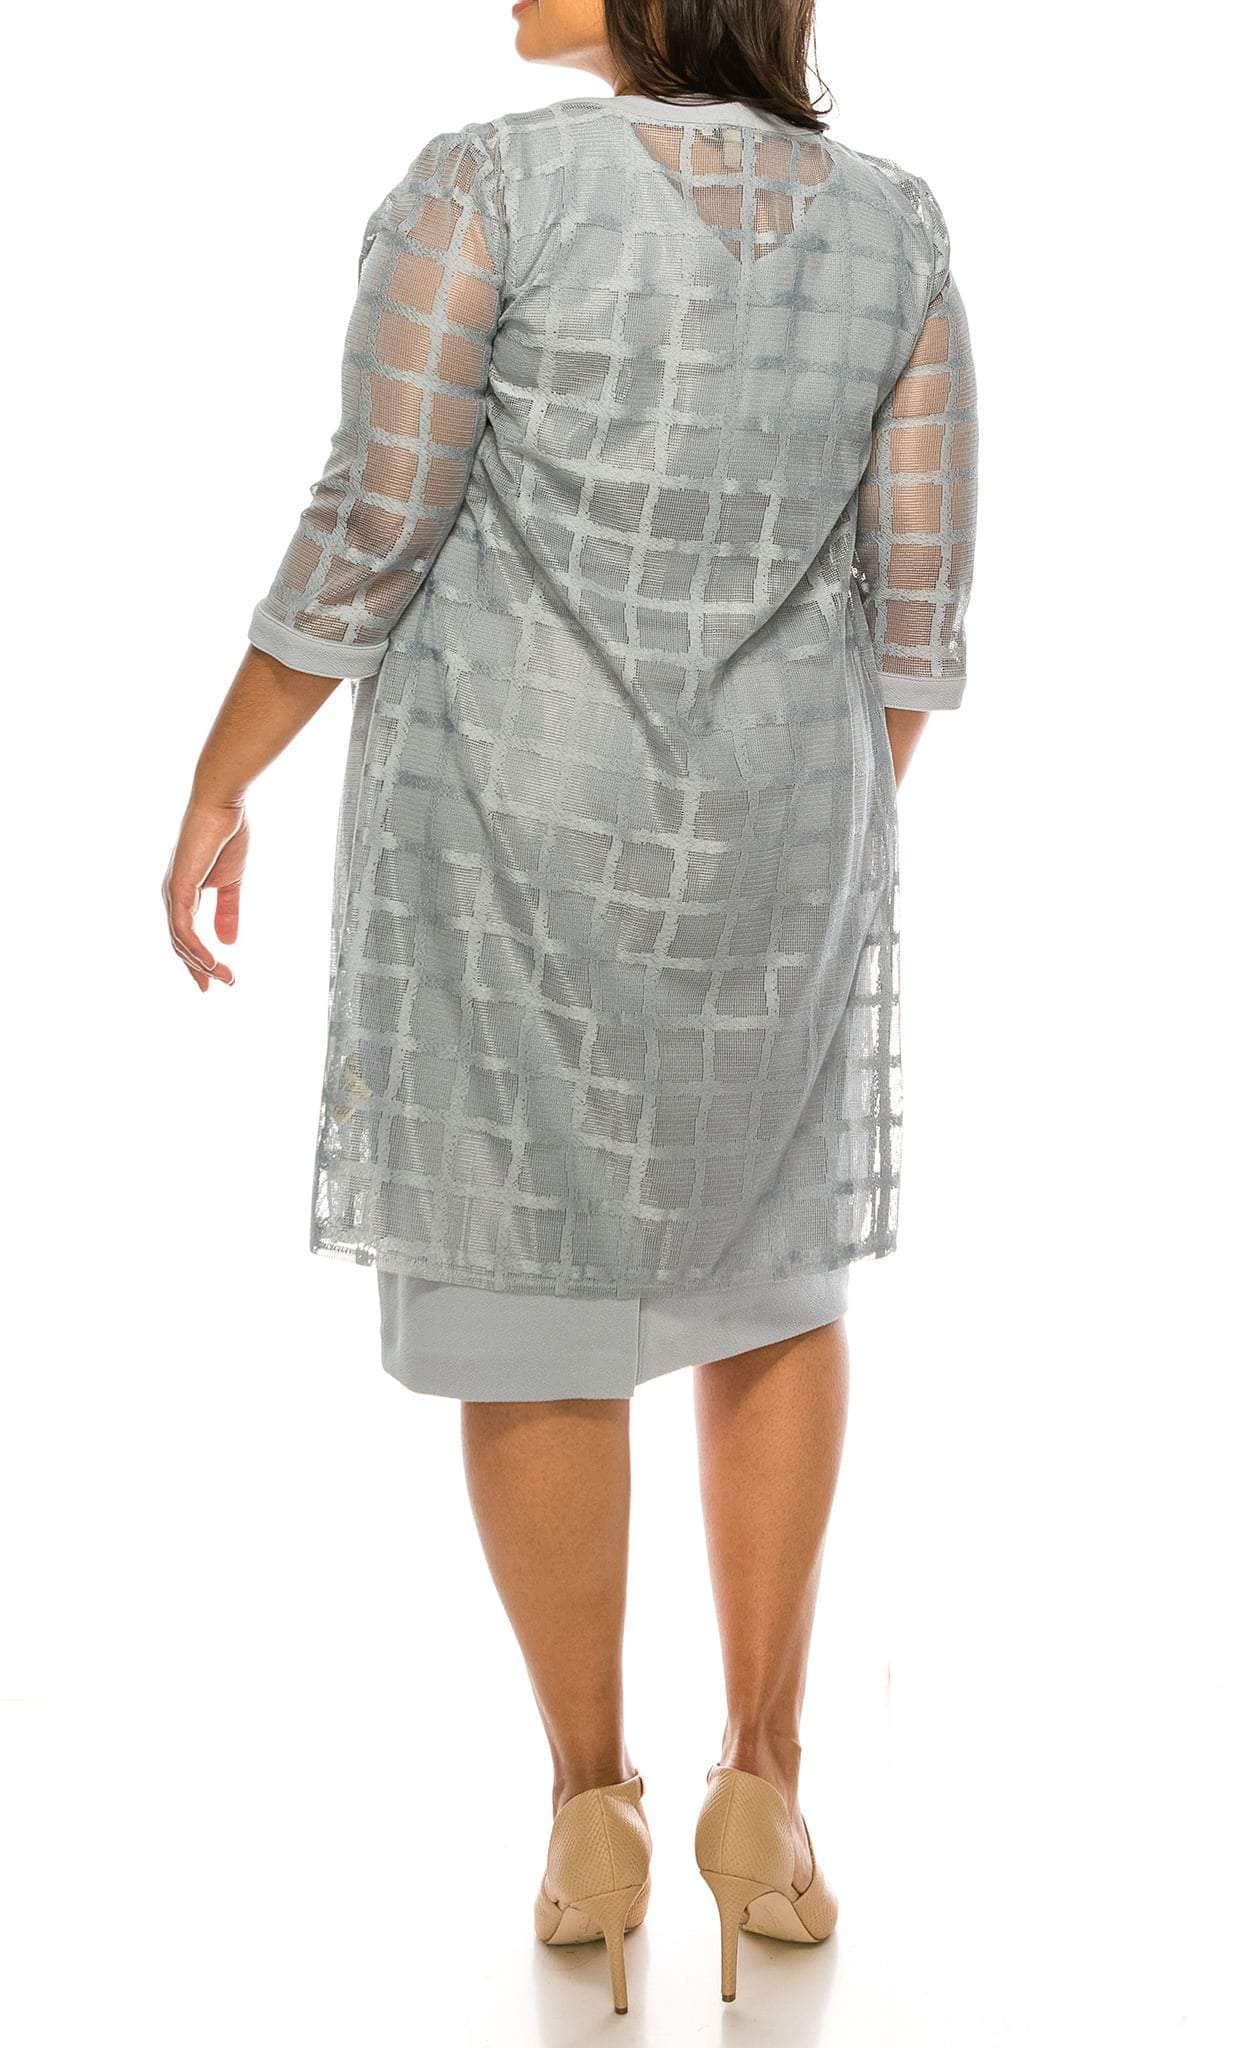 Maya Brooke 26367 - Jewel Neck Lace Jacket Formal Dress Special Occasion Dress